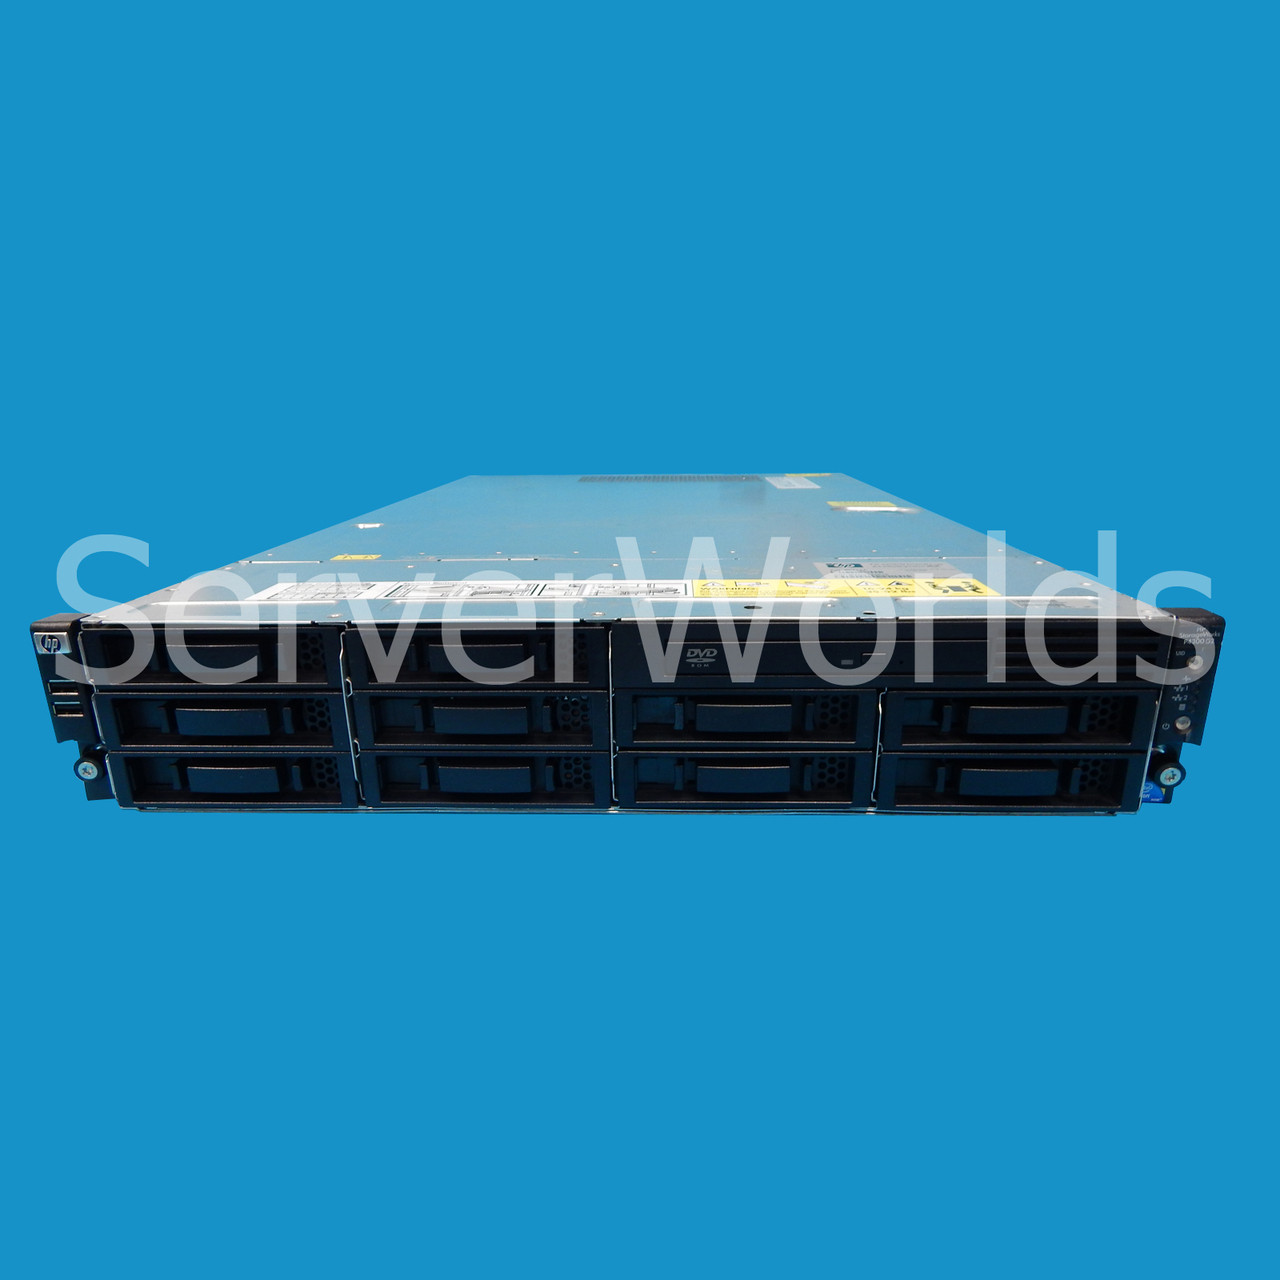 Refurbished HP 599468-001-i P4300 G2 Storageworks - No Drives - BK715A-i Front Panel